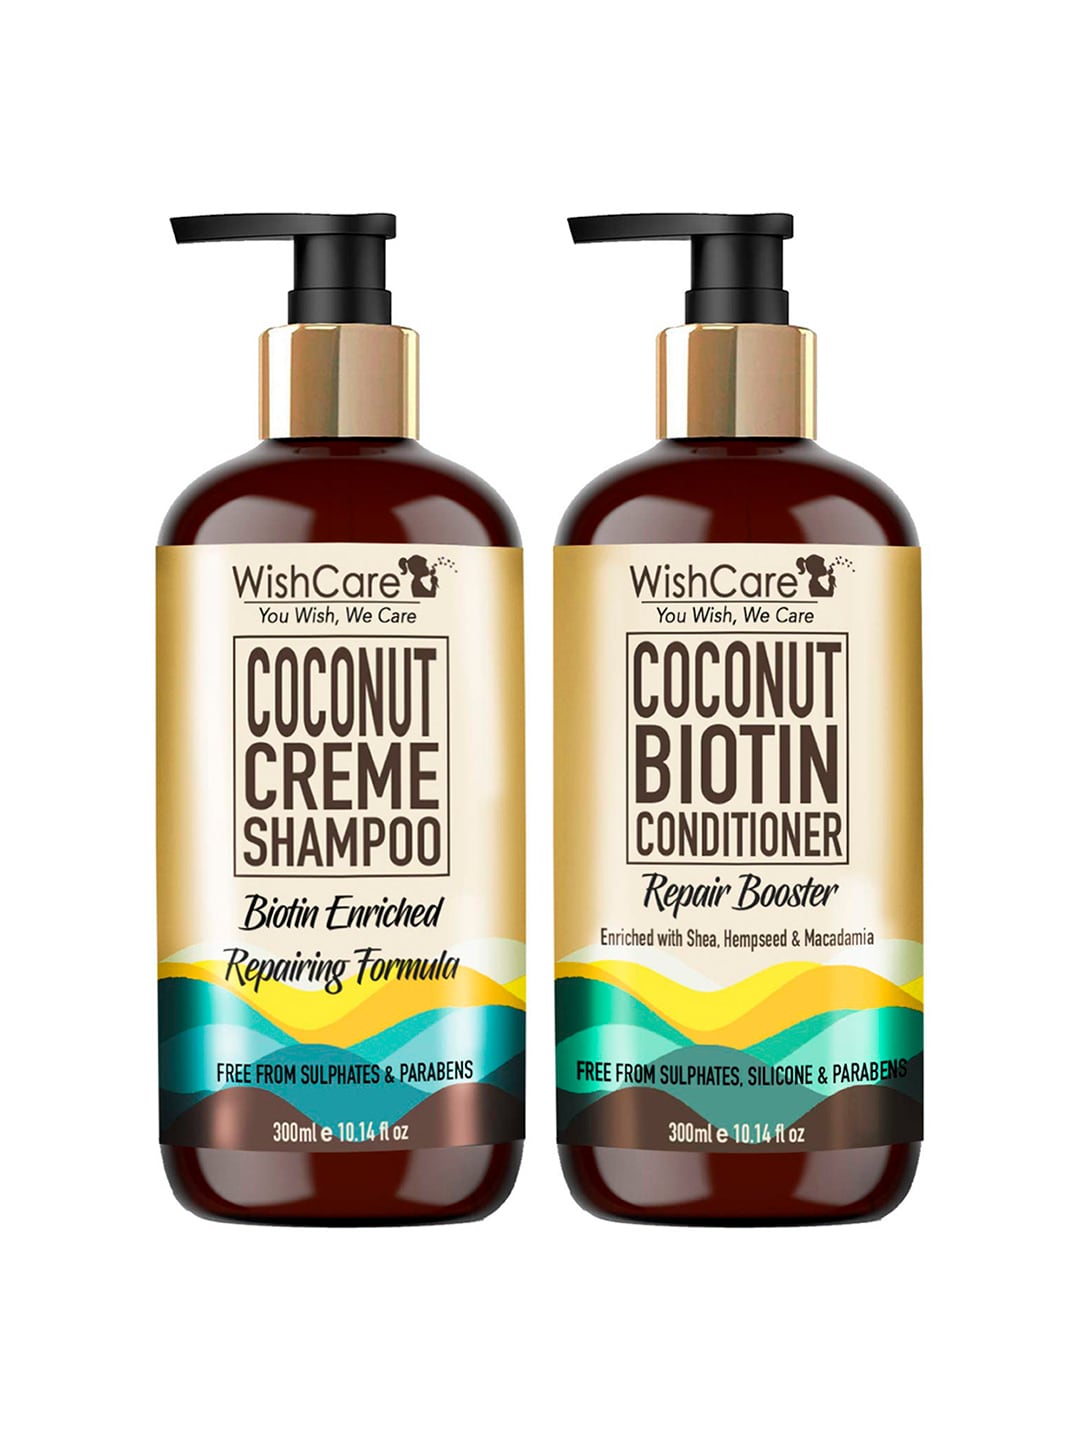 WishCare Coconut Crme Shampoo and Coconut Biotin Conditioner - 300 Ml each Price in India